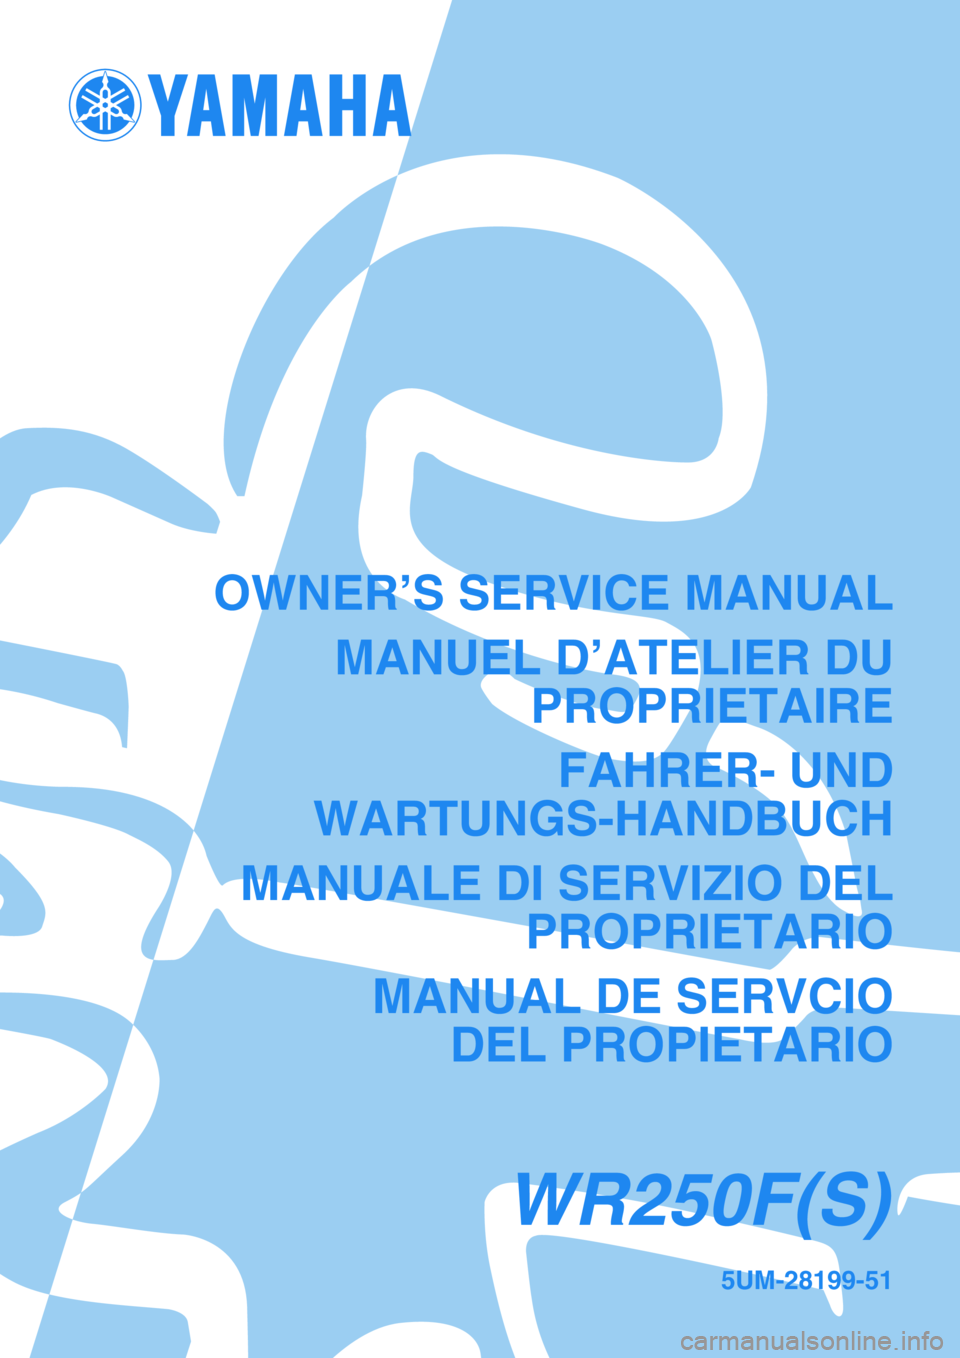 YAMAHA WR 250F 2004  Manuale de Empleo (in Spanish) 5UM-28199-51
WR250F(S)
OWNER’S SERVICE MANUAL
MANUEL D’ATELIER DU
PROPRIETAIRE
FAHRER- UND
WARTUNGS-HANDBUCH
MANUALE DI SERVIZIO DEL
PROPRIETARIO
MANUAL DE SERVCIO
DEL PROPIETARIO 